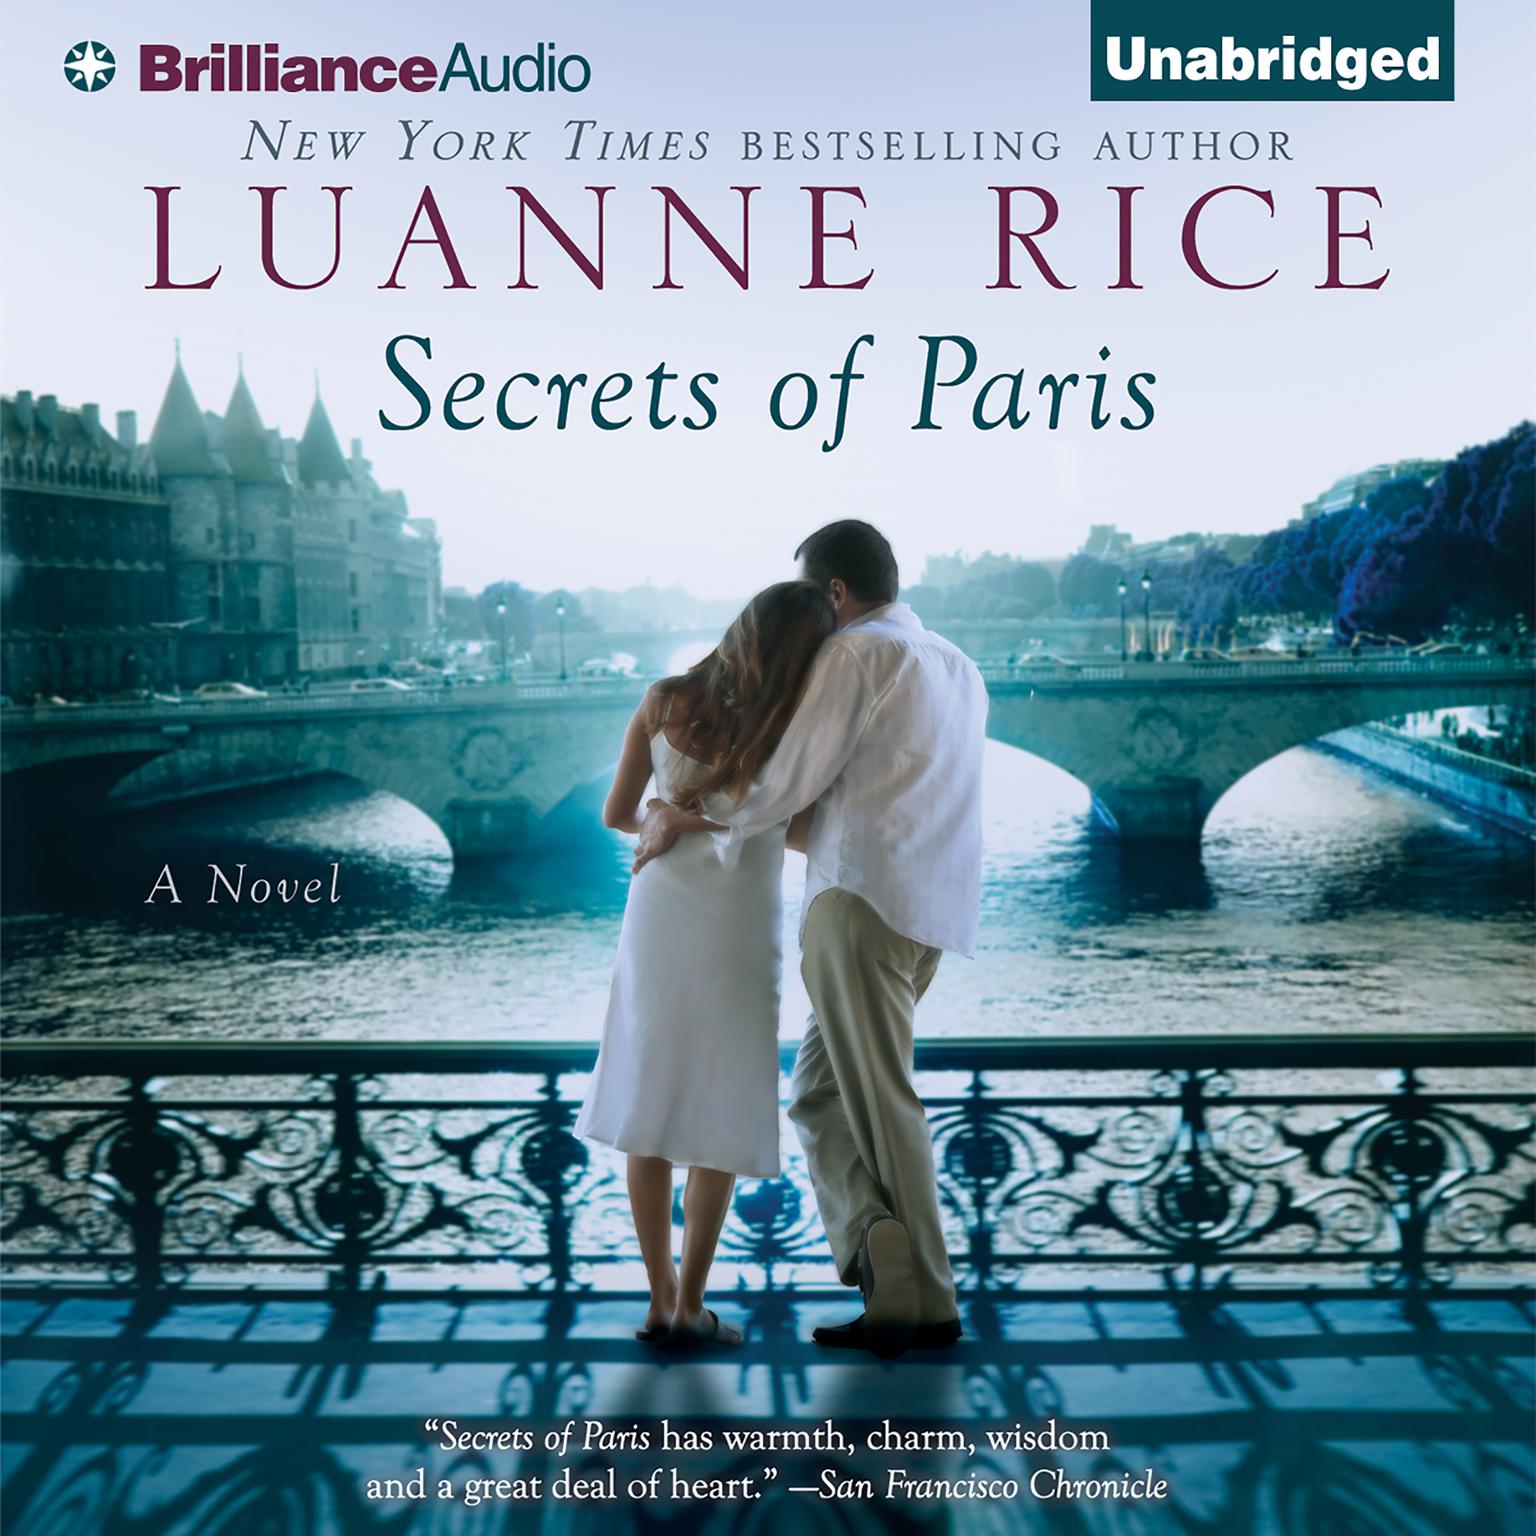 Secrets of Paris Audiobook, by Luanne Rice